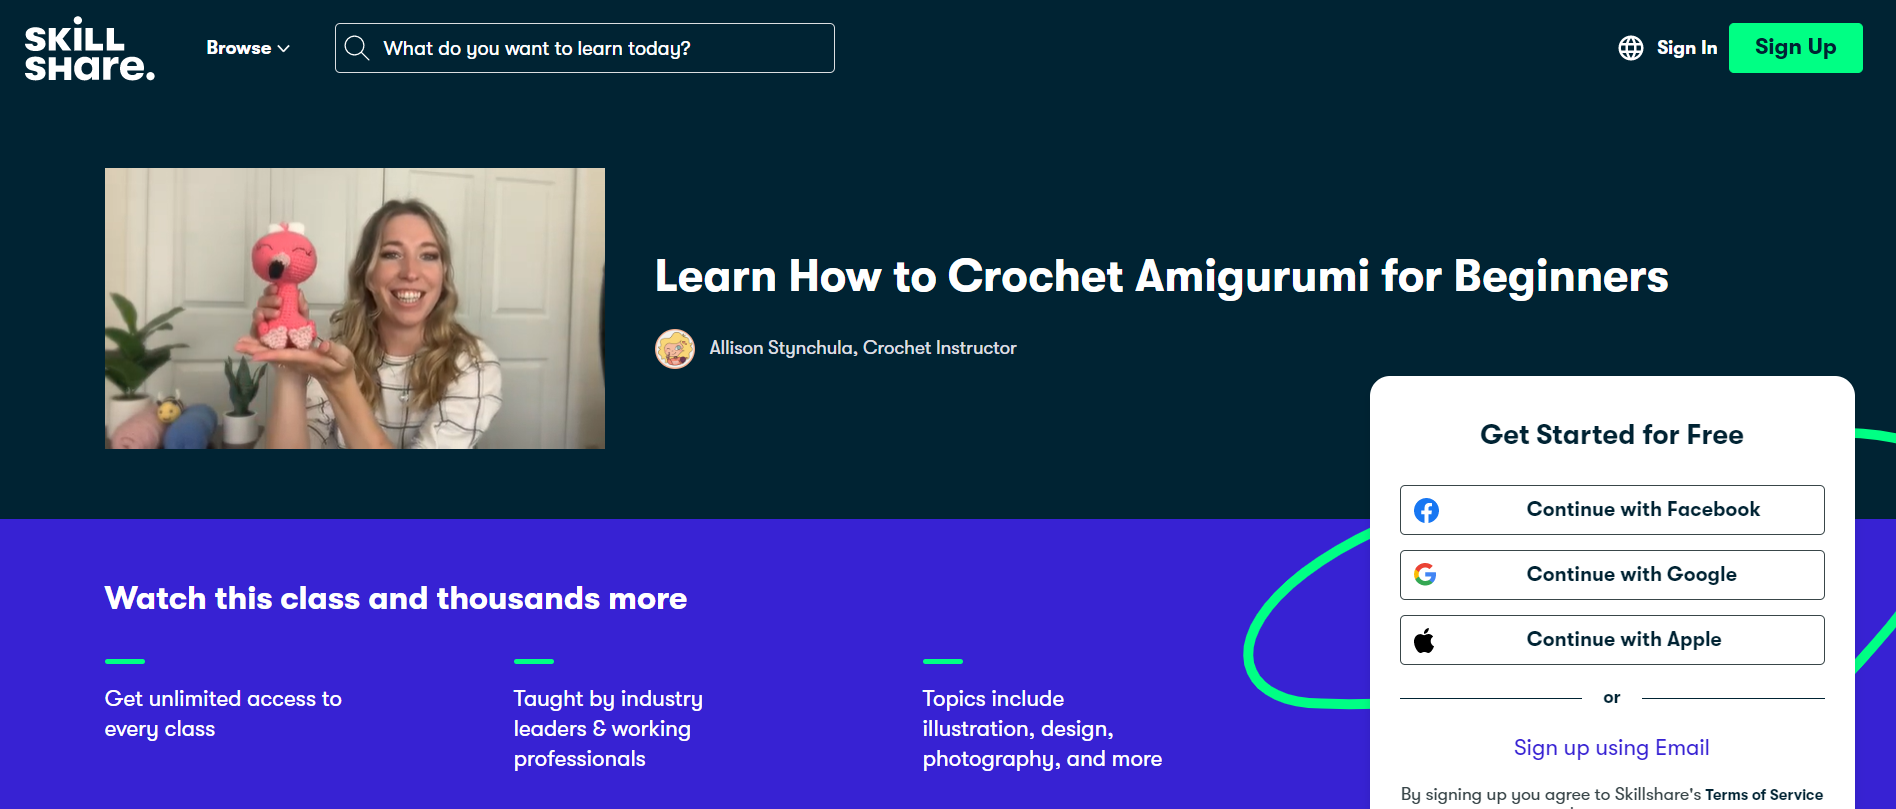 Learn How To Crochet Amigurumi for Beginners